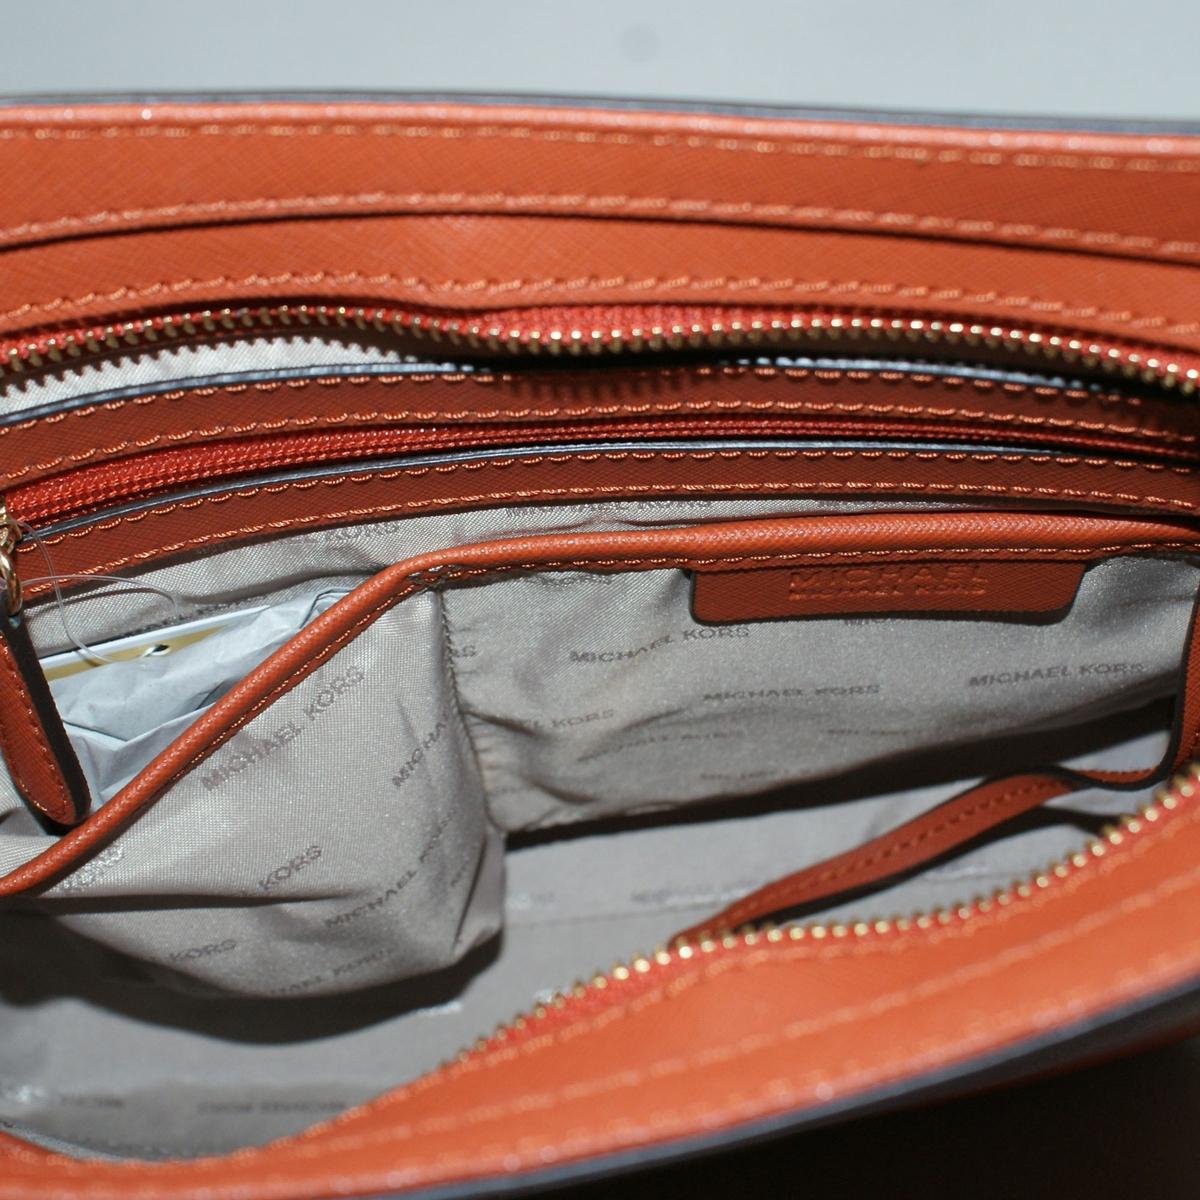 mk orange purse